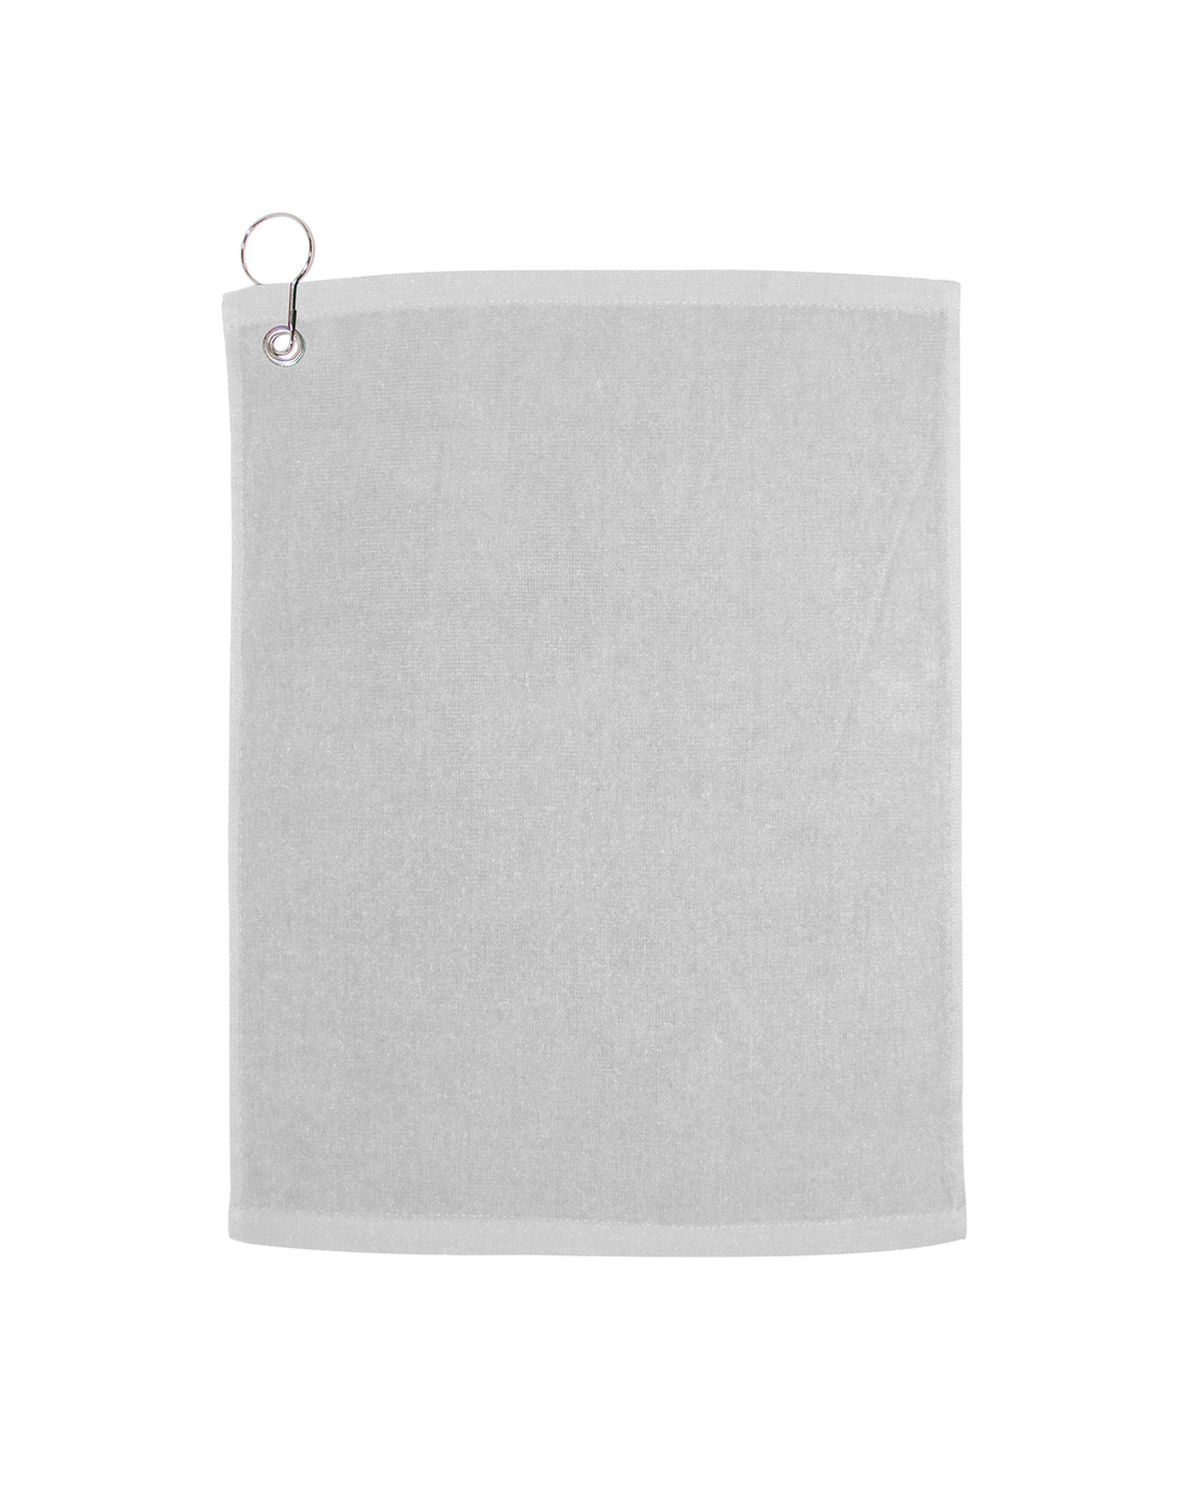 'Carmel Towel Company C1518GH Carmel Towel Large Rally Towel With Grommet and Hook'